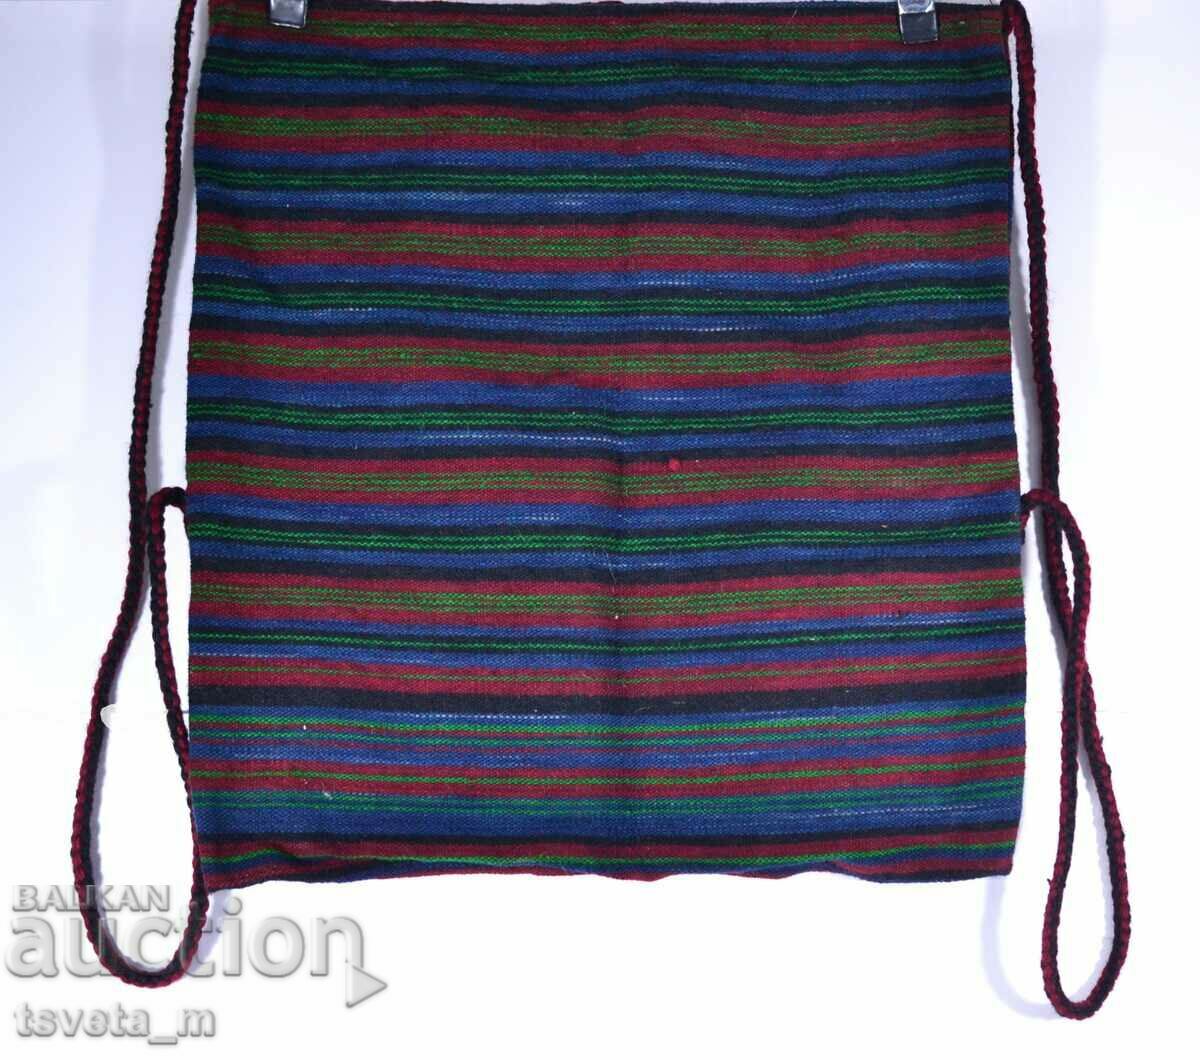 Wool handwoven bag, backpack